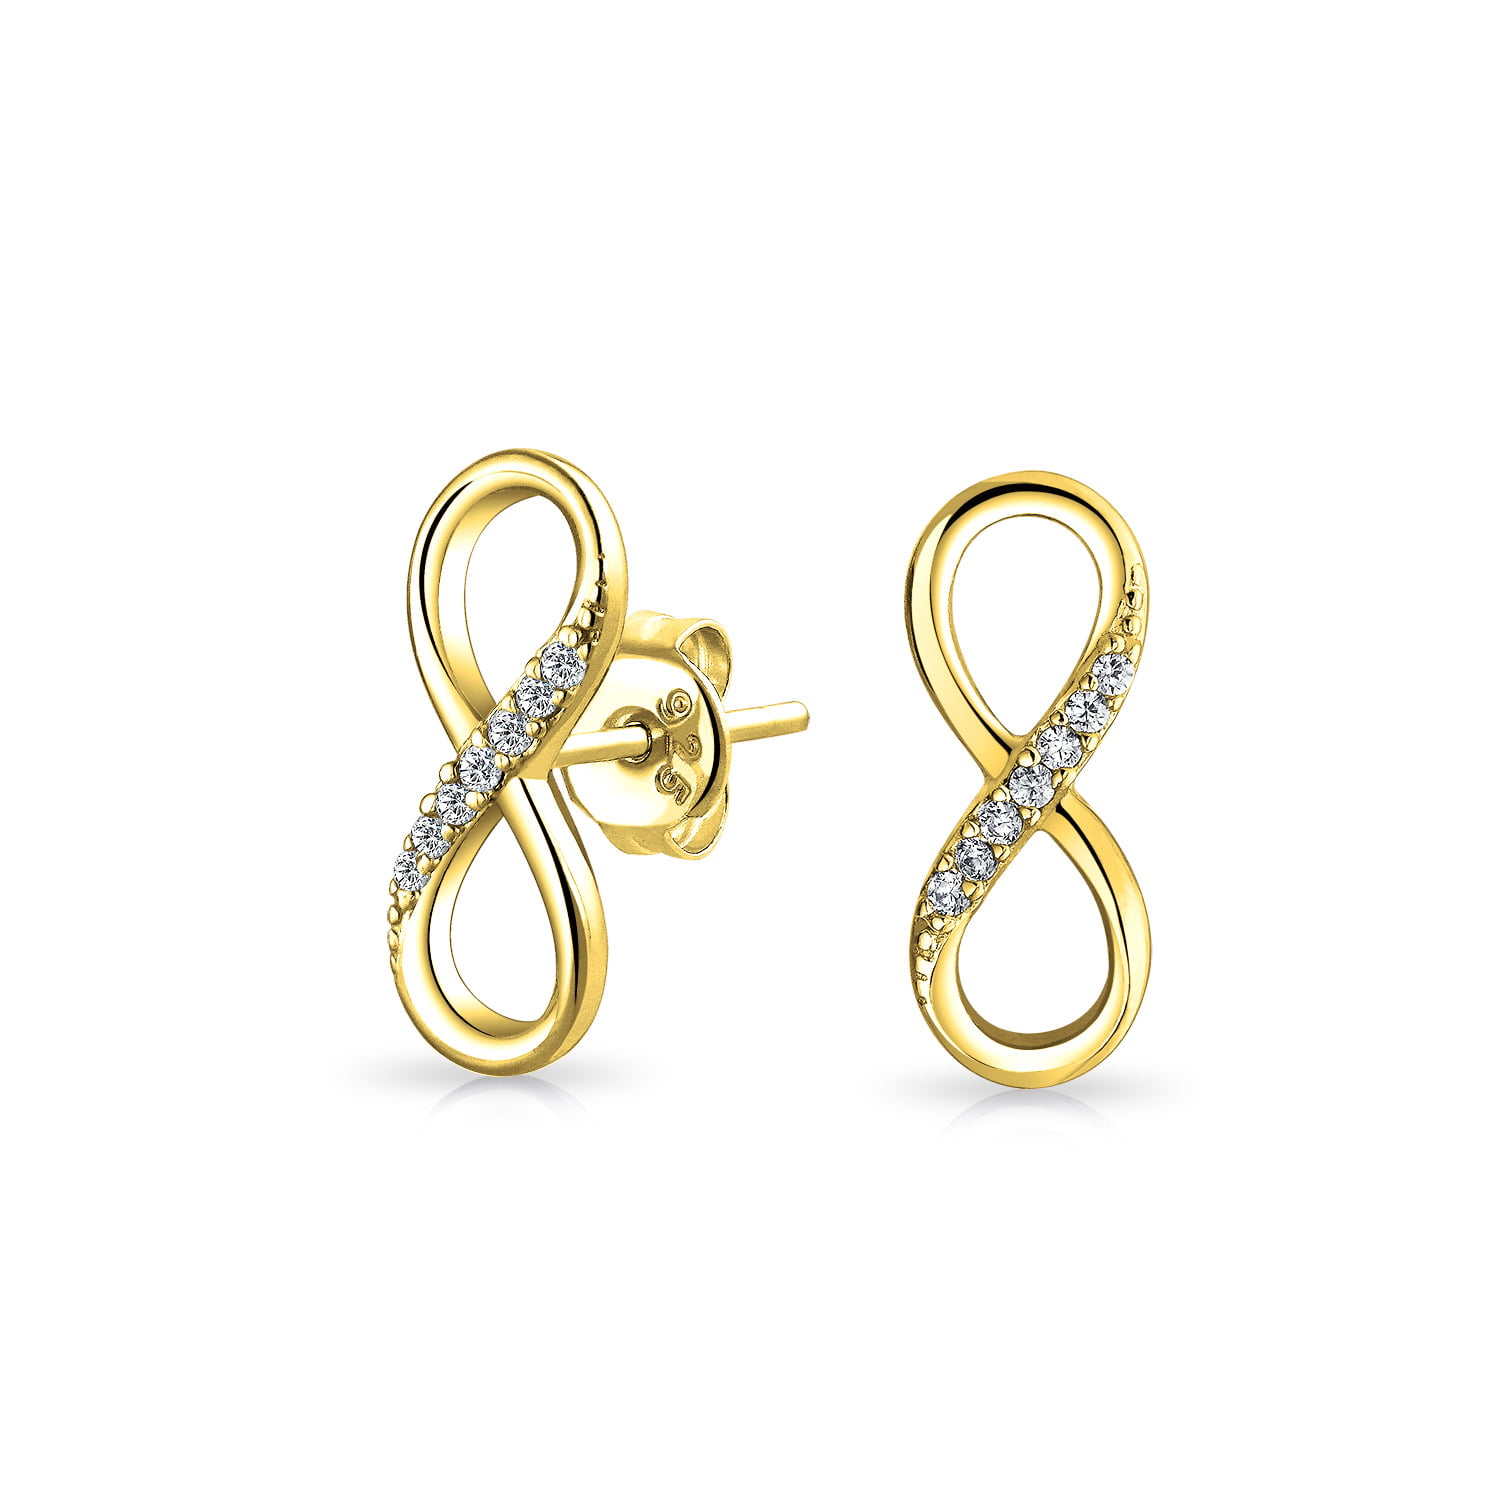 Infinity Math Symbol Eternal Love Sign 925 Sterling Silver Hook Dangle Earrings